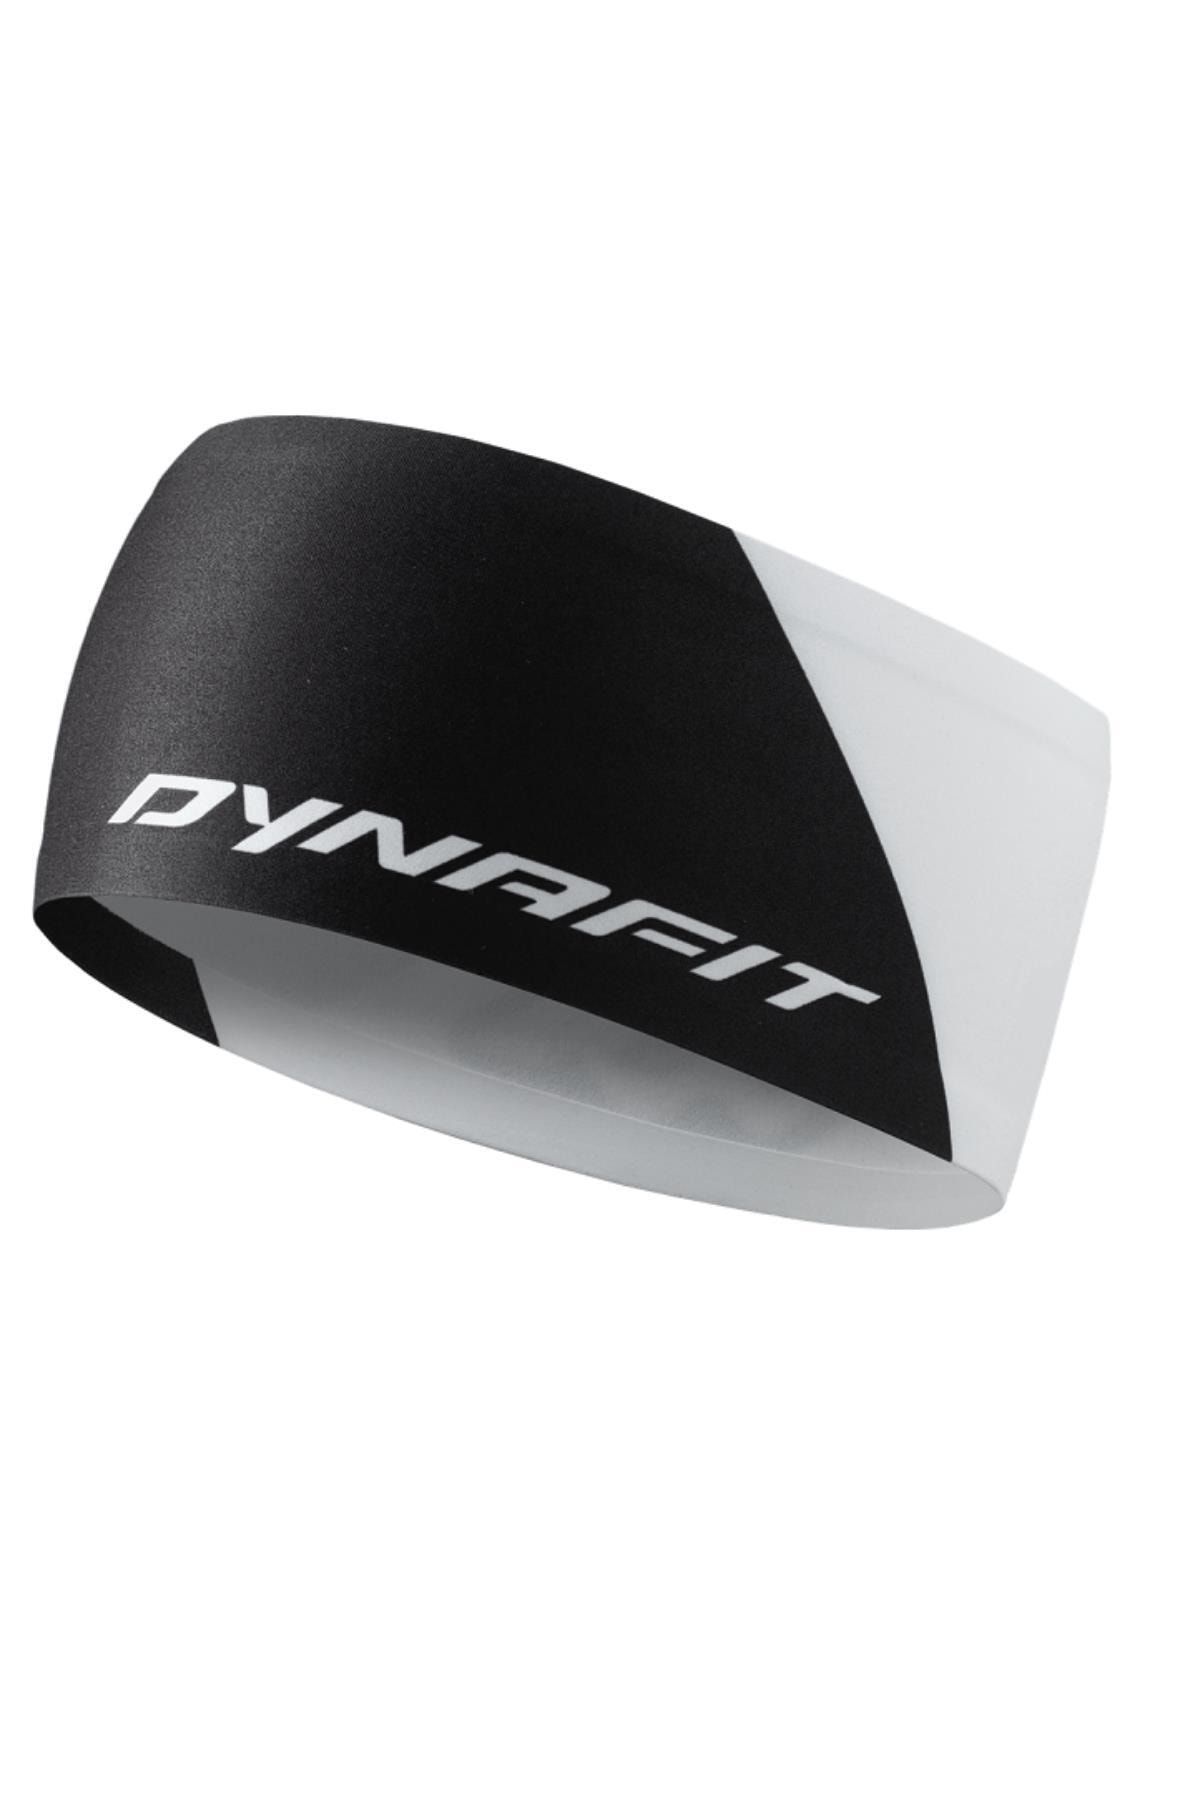 Dynafit Performance 2 Dry Kafa Bandı